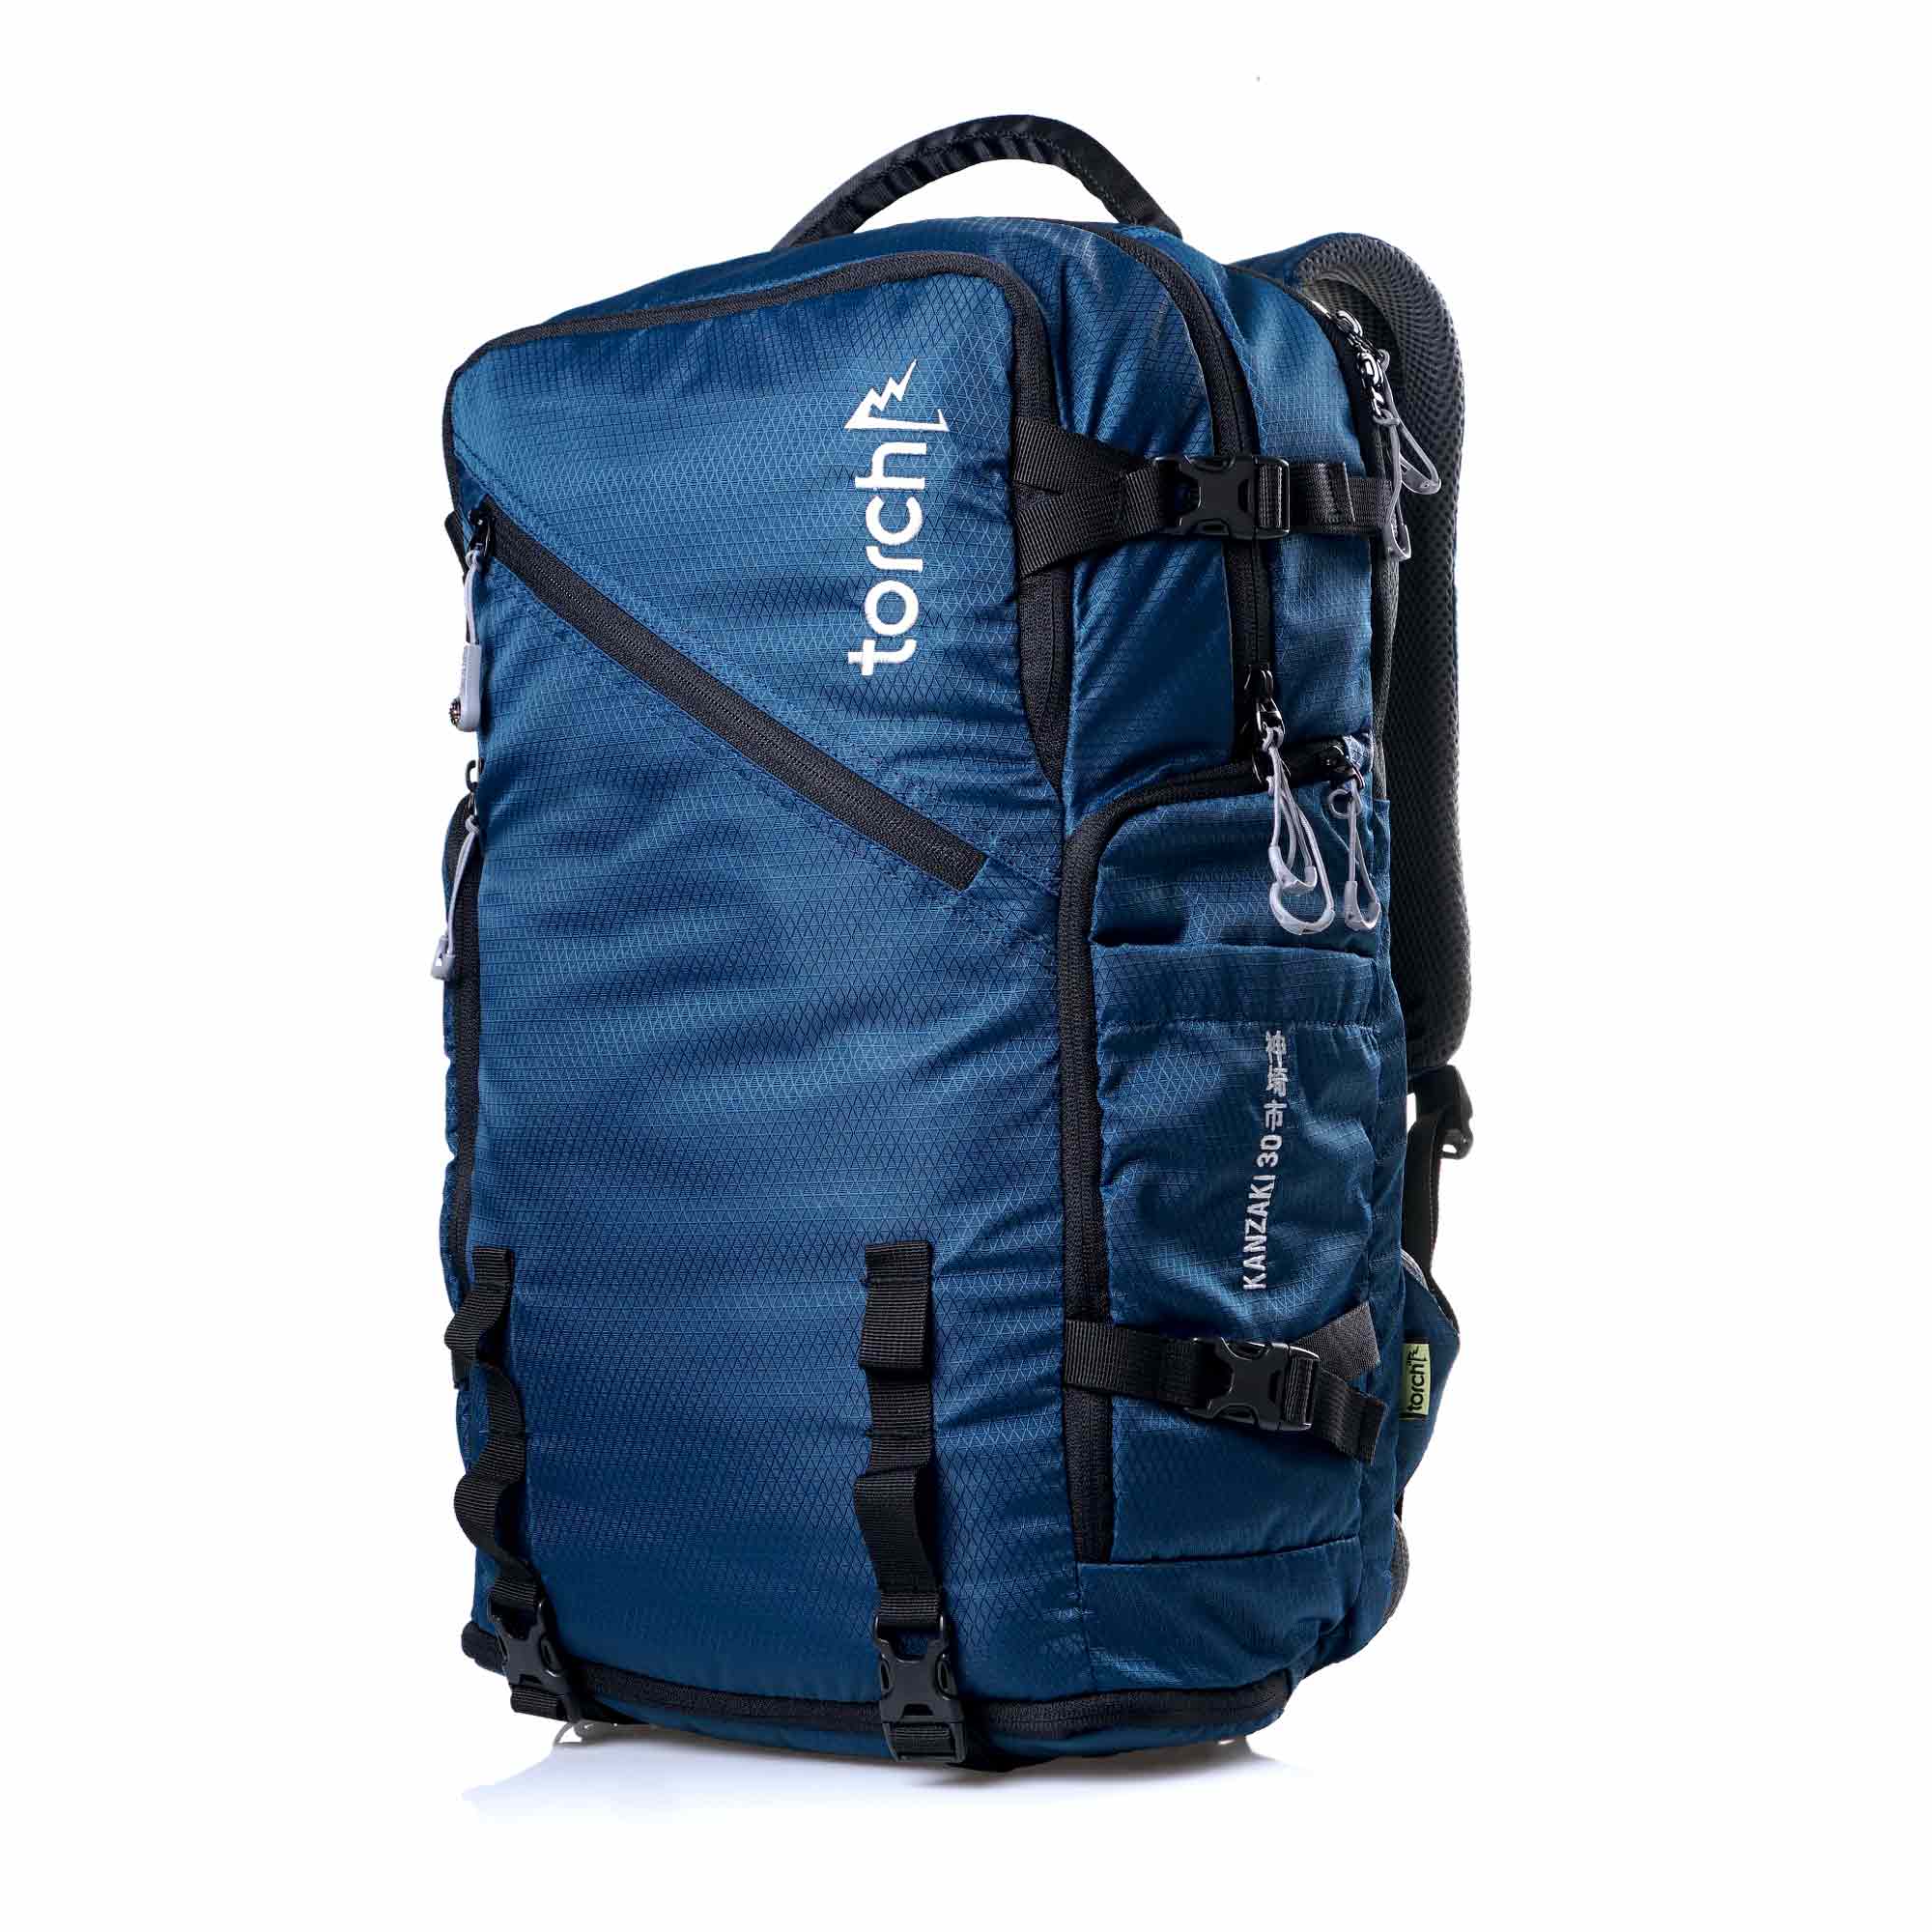 Paket Traveling - Kanzaki Light Travel Backpack + Nikoi Bucket Hat + Yeocha E Toiletries + Cuello Bantal Leher